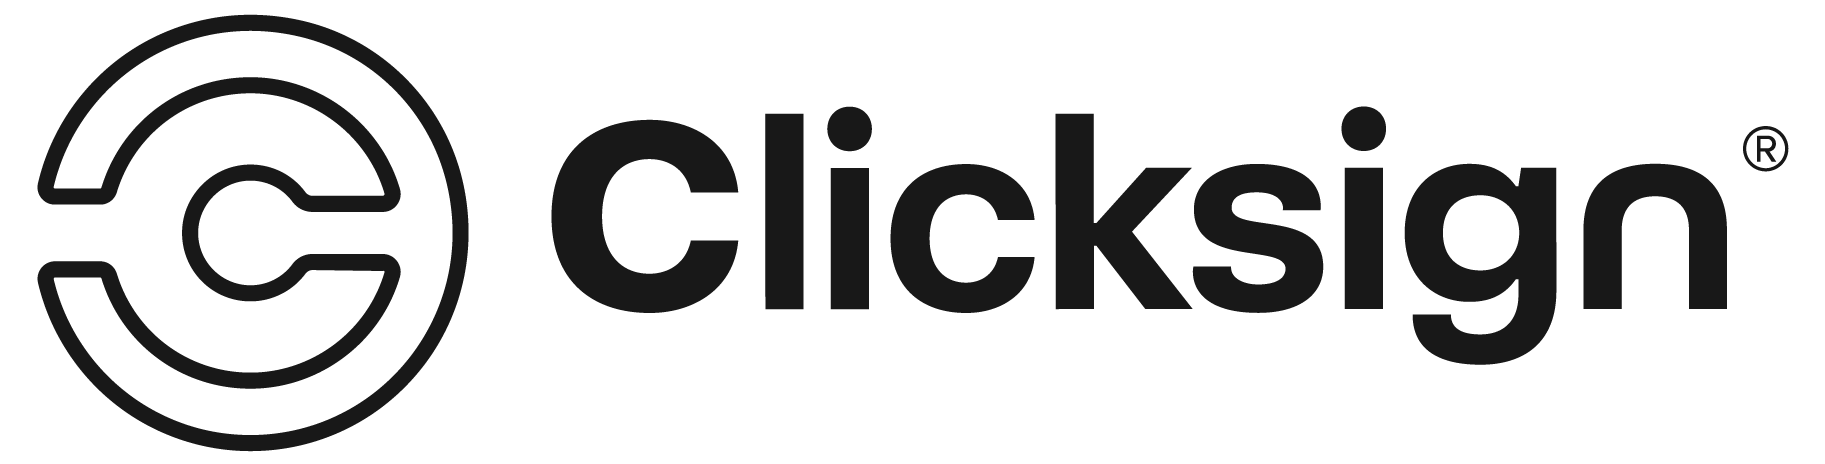 clicksign-2021-preto (1).png